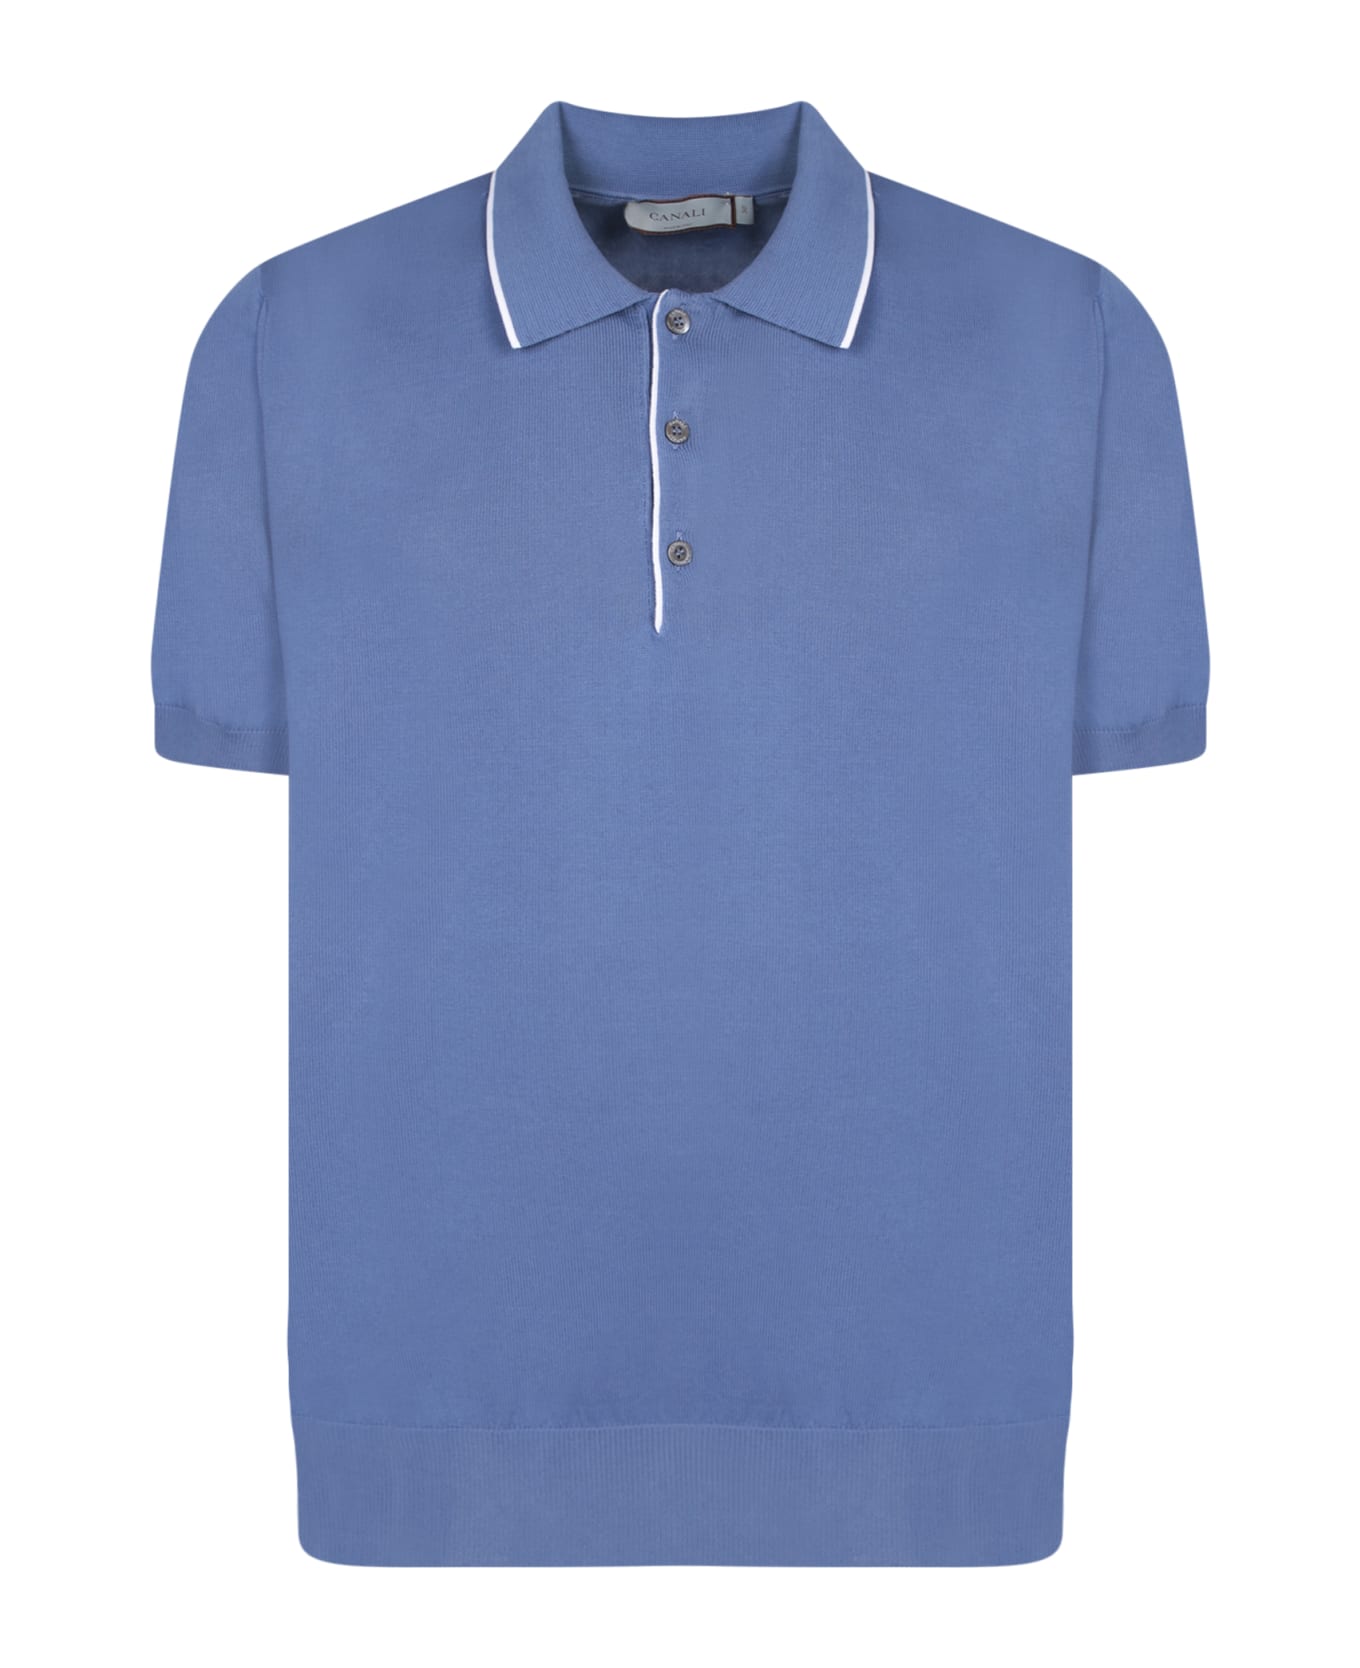 Canali Edges White/avion Polo Shirt - Blue ポロシャツ